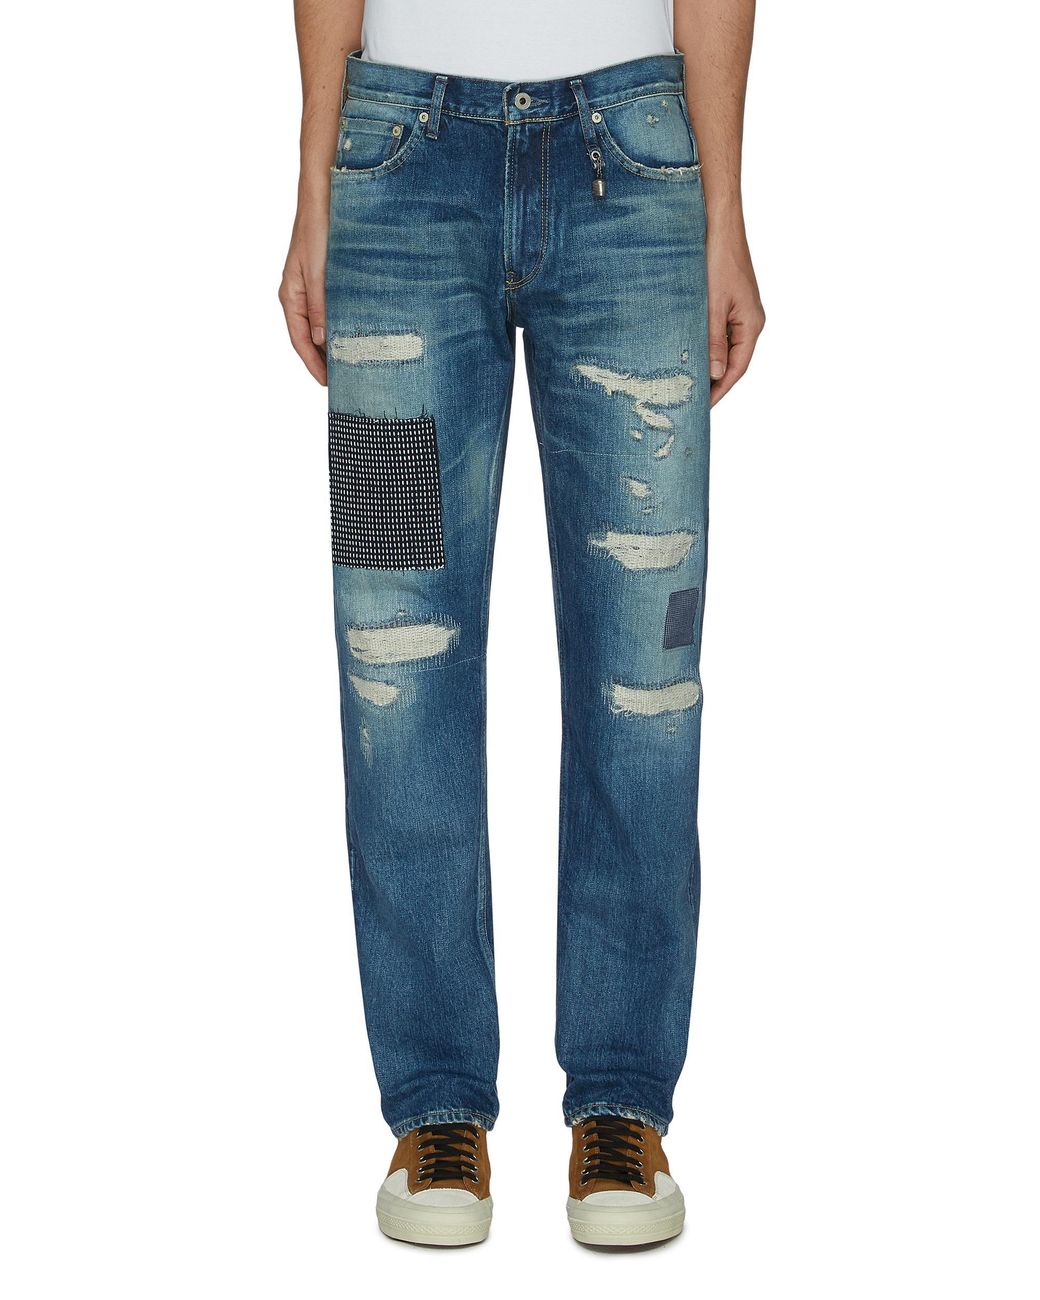 FDMTL Distressed Patchwork Raw Edge Denim Jeans in Blue for Men - Lyst